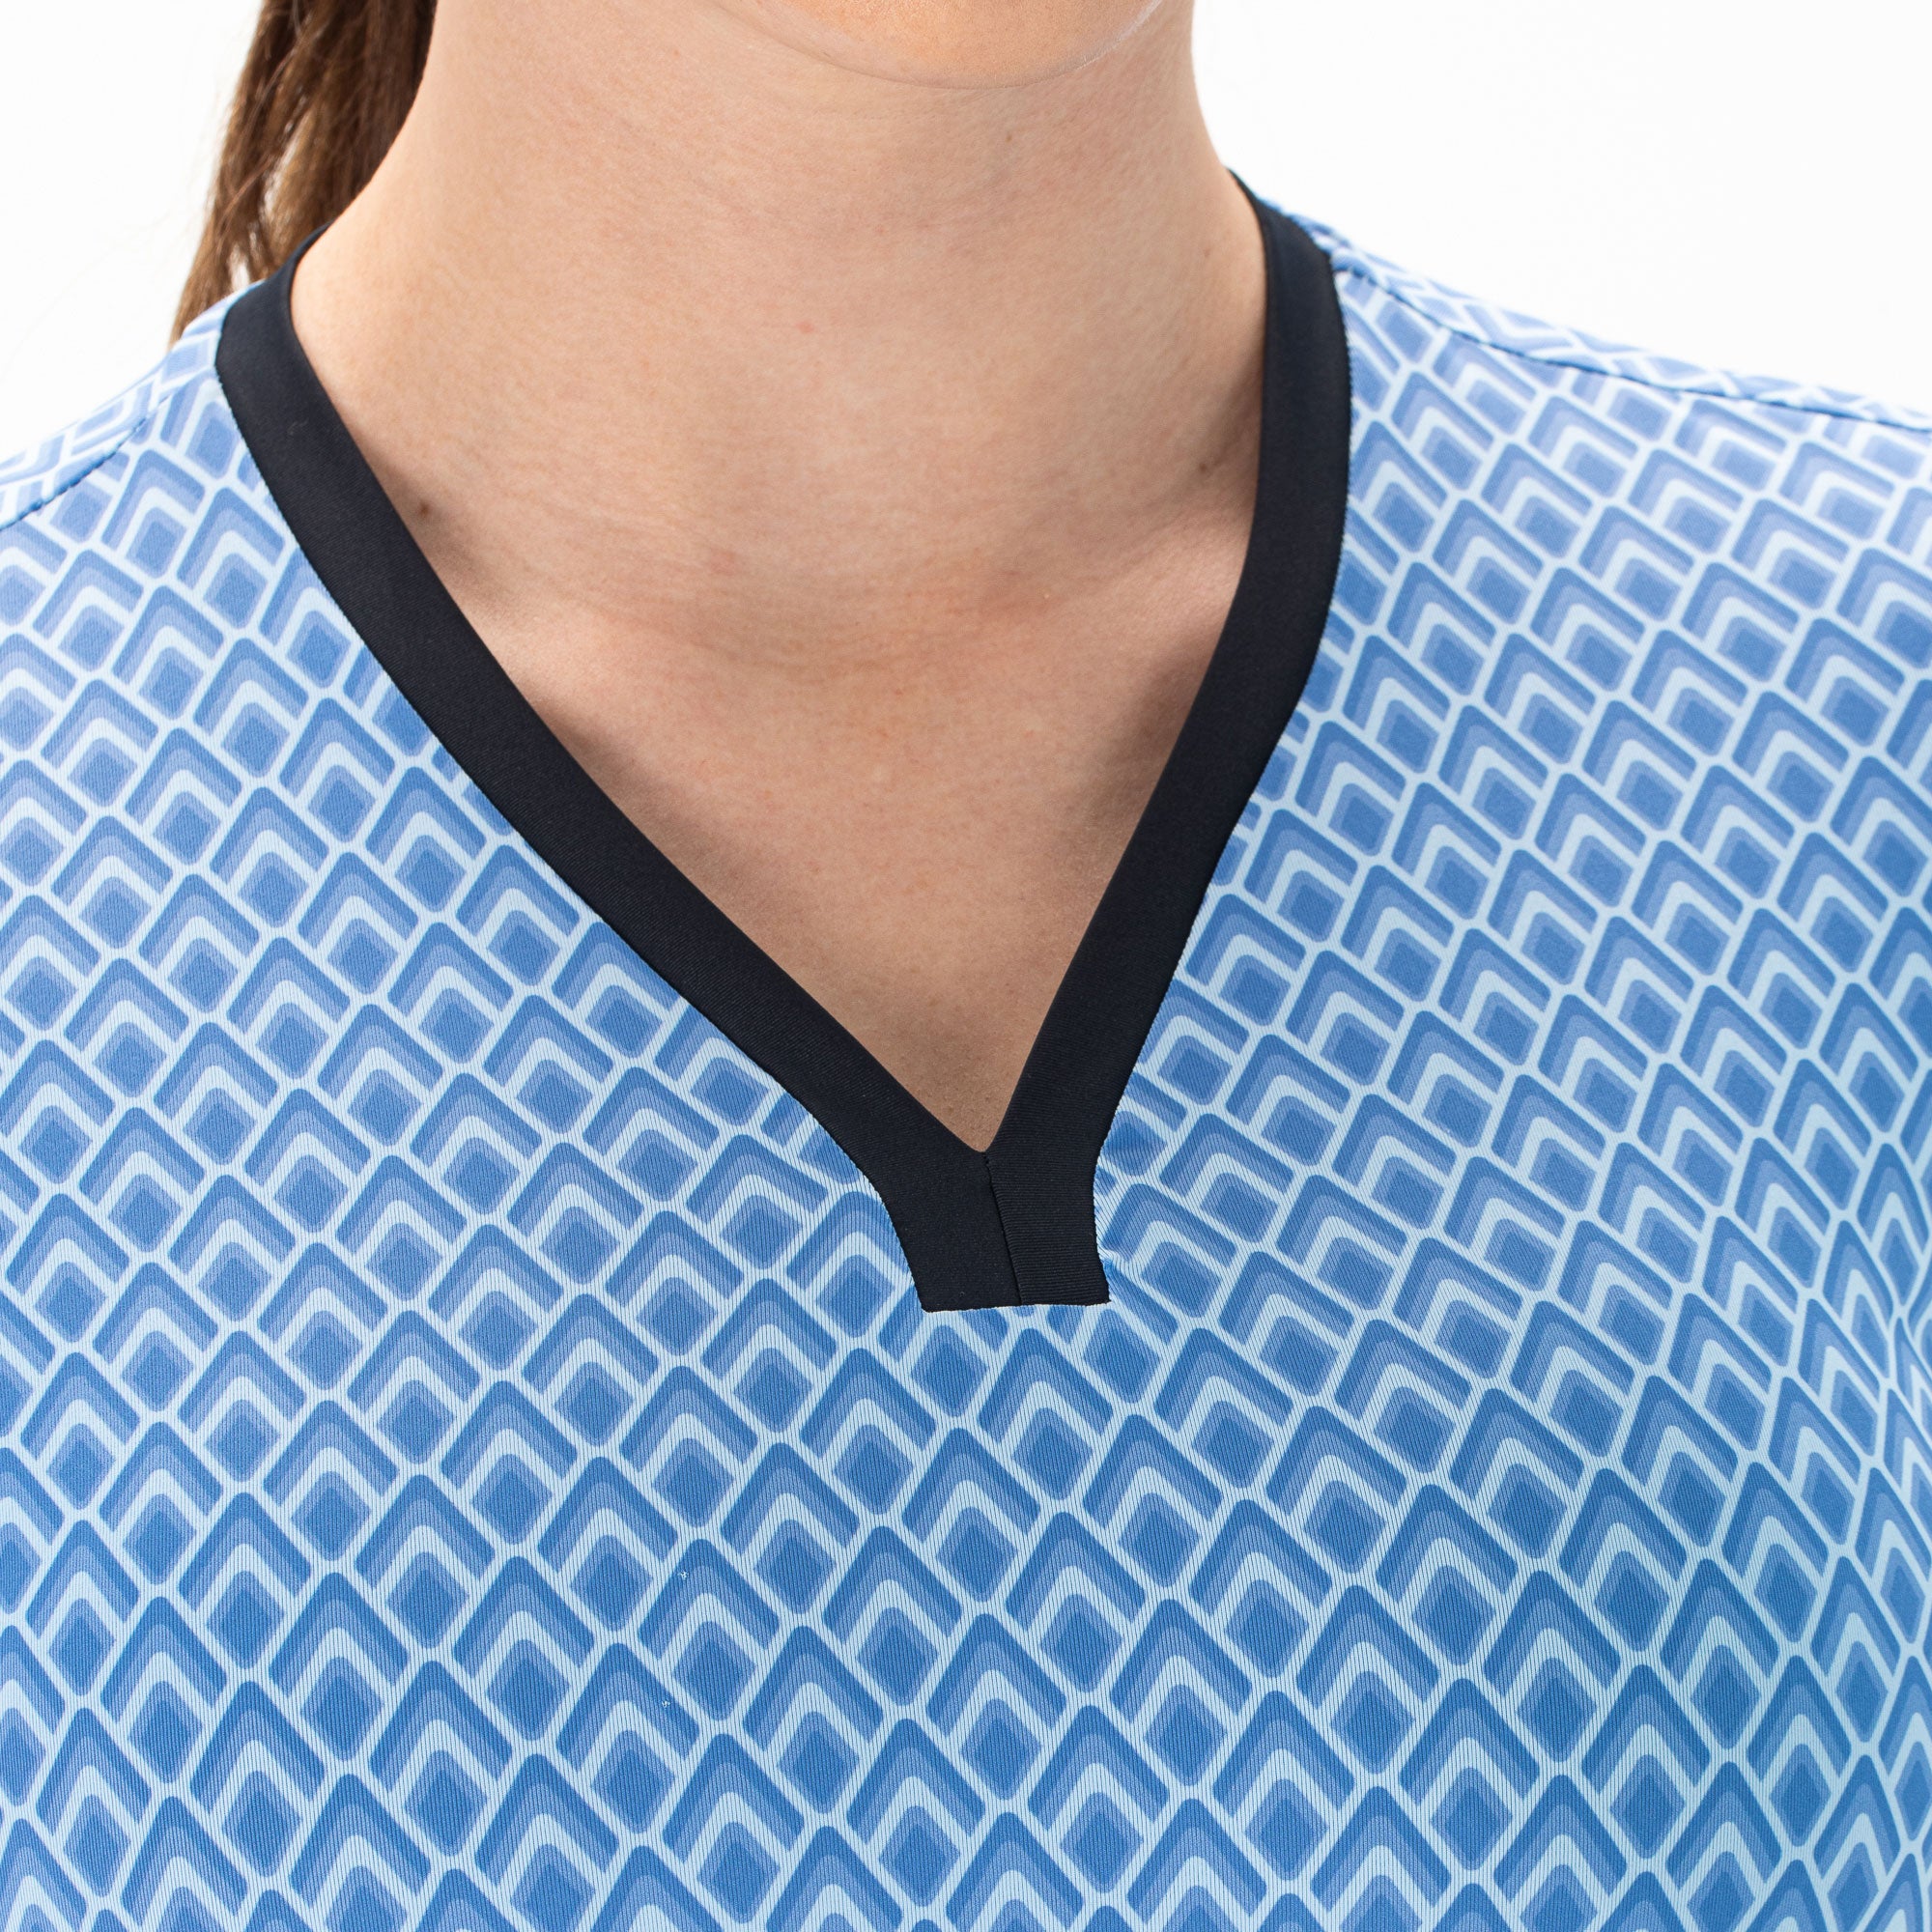 Sjeng Sports Inge Women's Tennis Shirt - Blue (3)